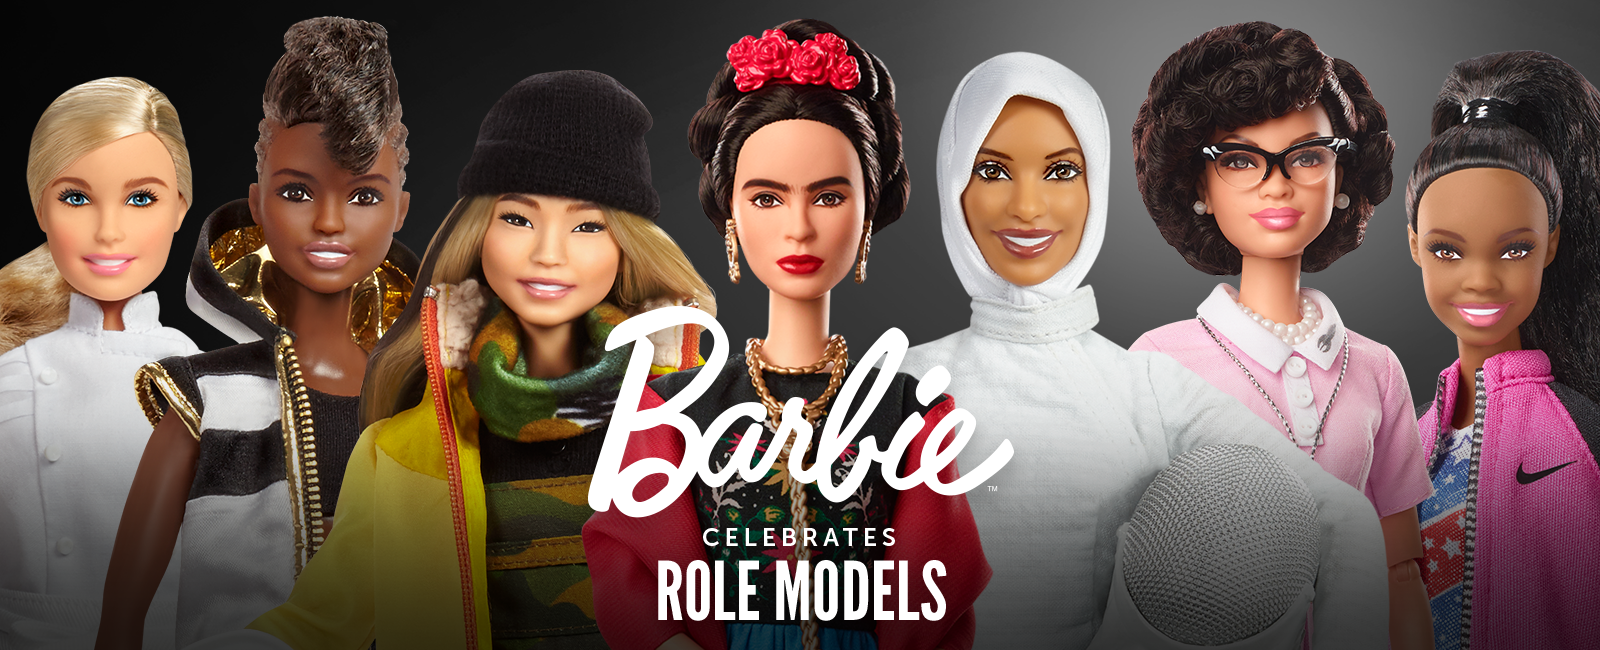 From left to right: Helene Darroze, Nicola Adams One, Chloe Kim, Frida Kahlo, Ibtihaj Muhammad, Katherine Johnson, and Gabby Douglas are the new faces of Barbie. 